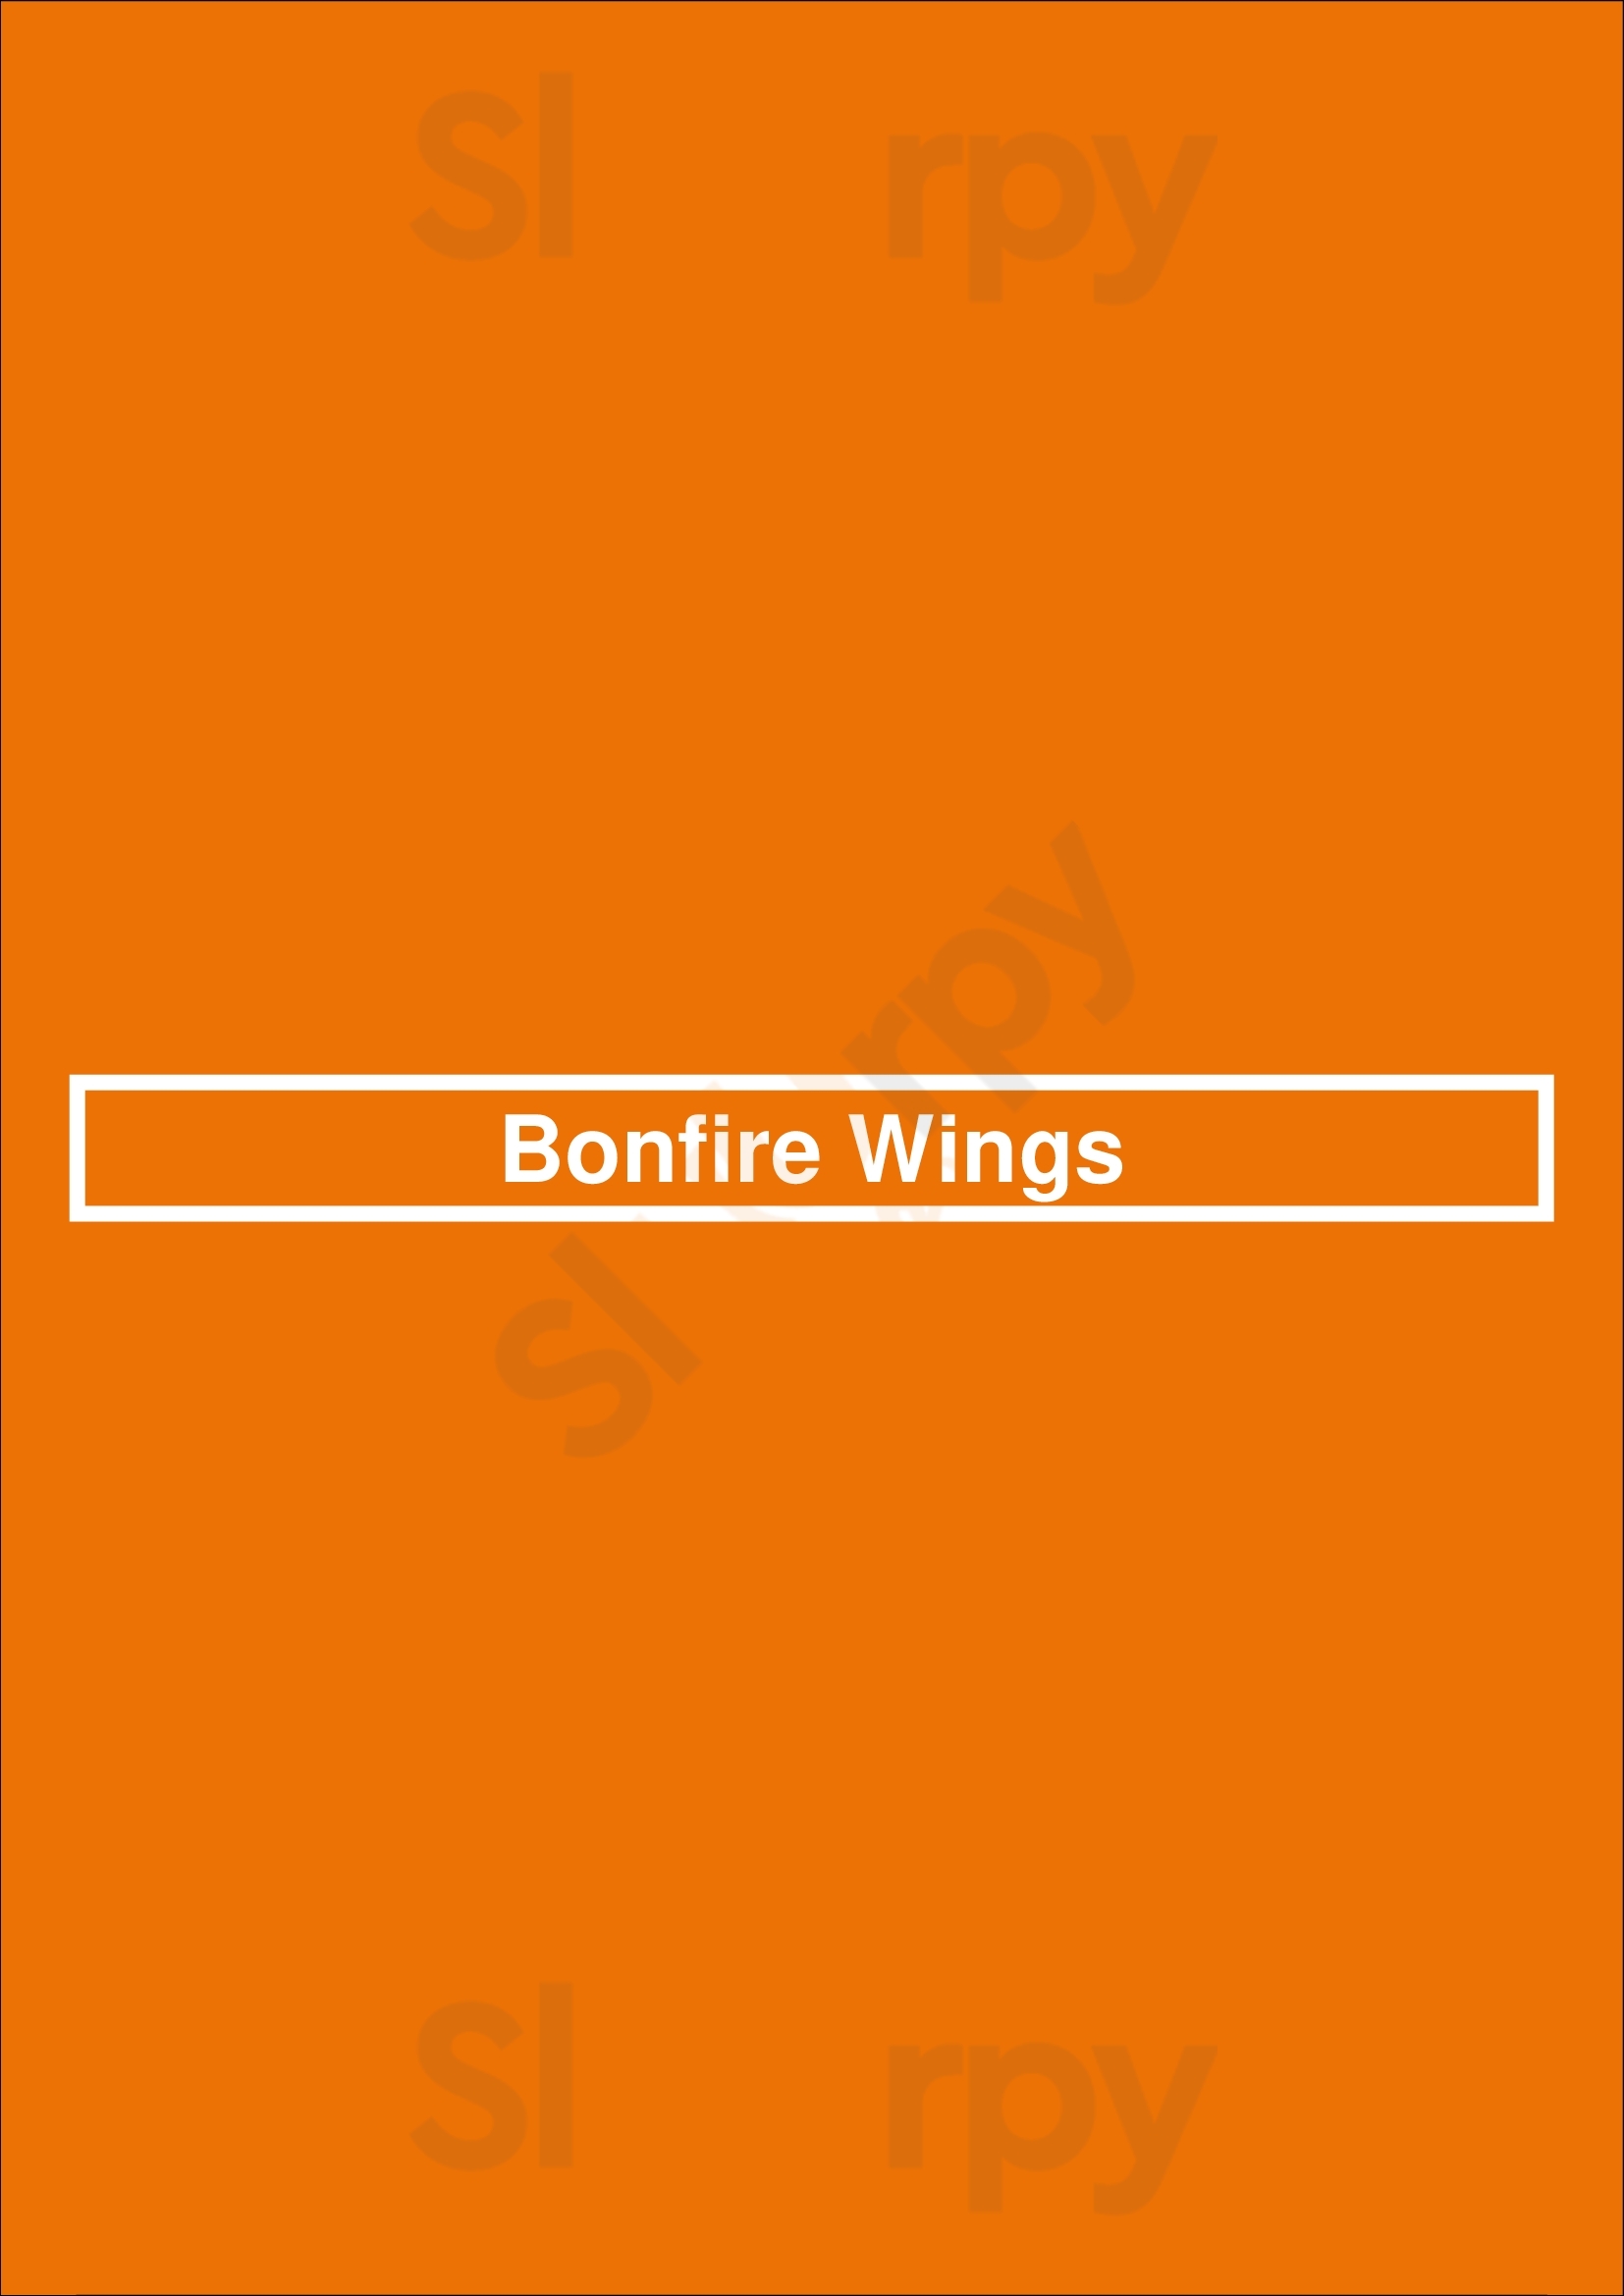 Bonfire Wings Houston Menu - 1